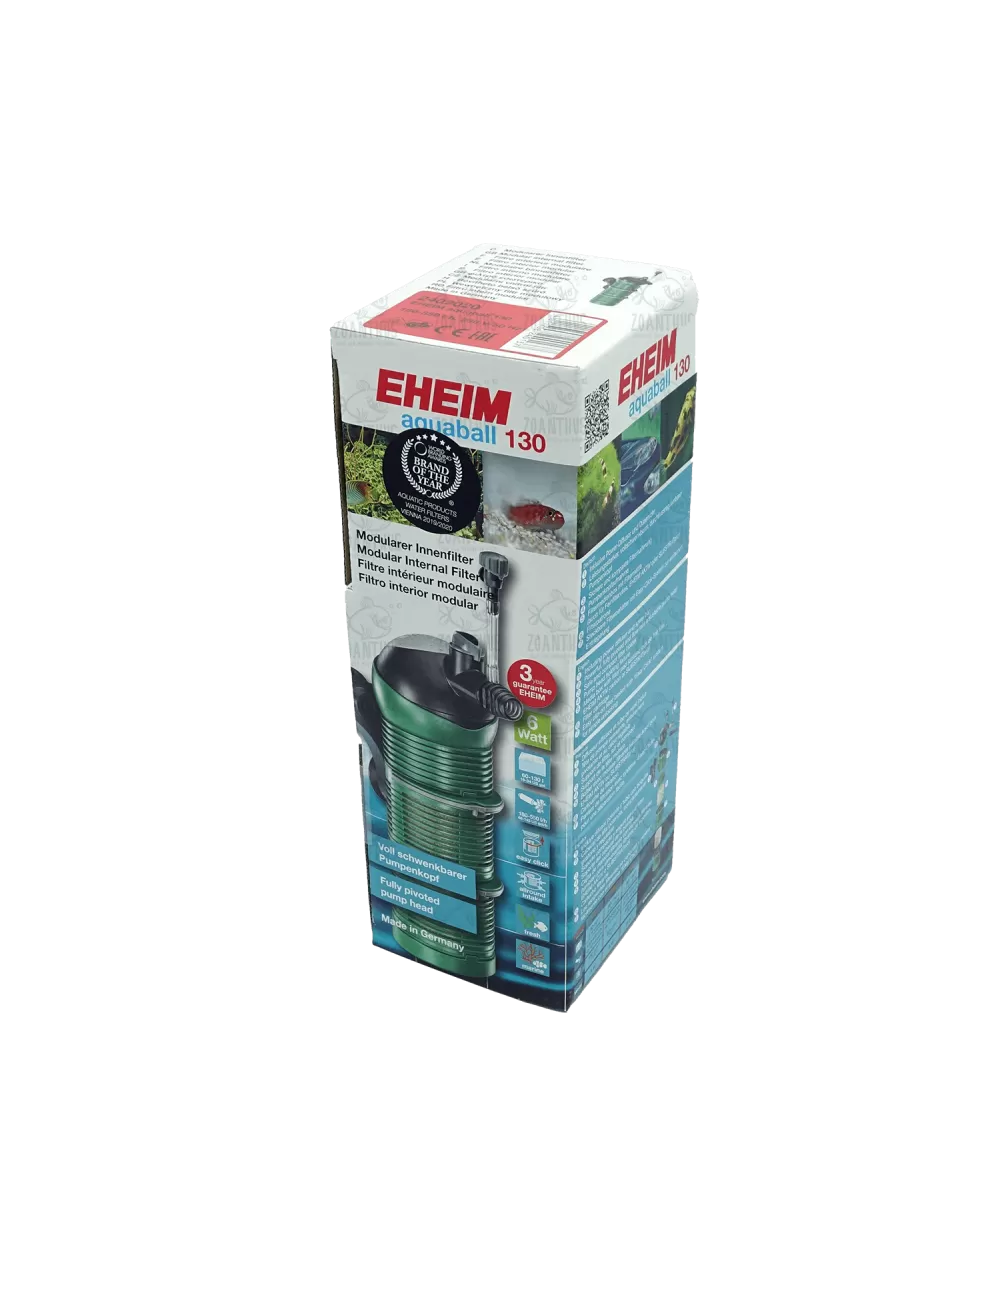 EHEIM - Aquaball 130 - Innenfilter für Aquarien bis 130l